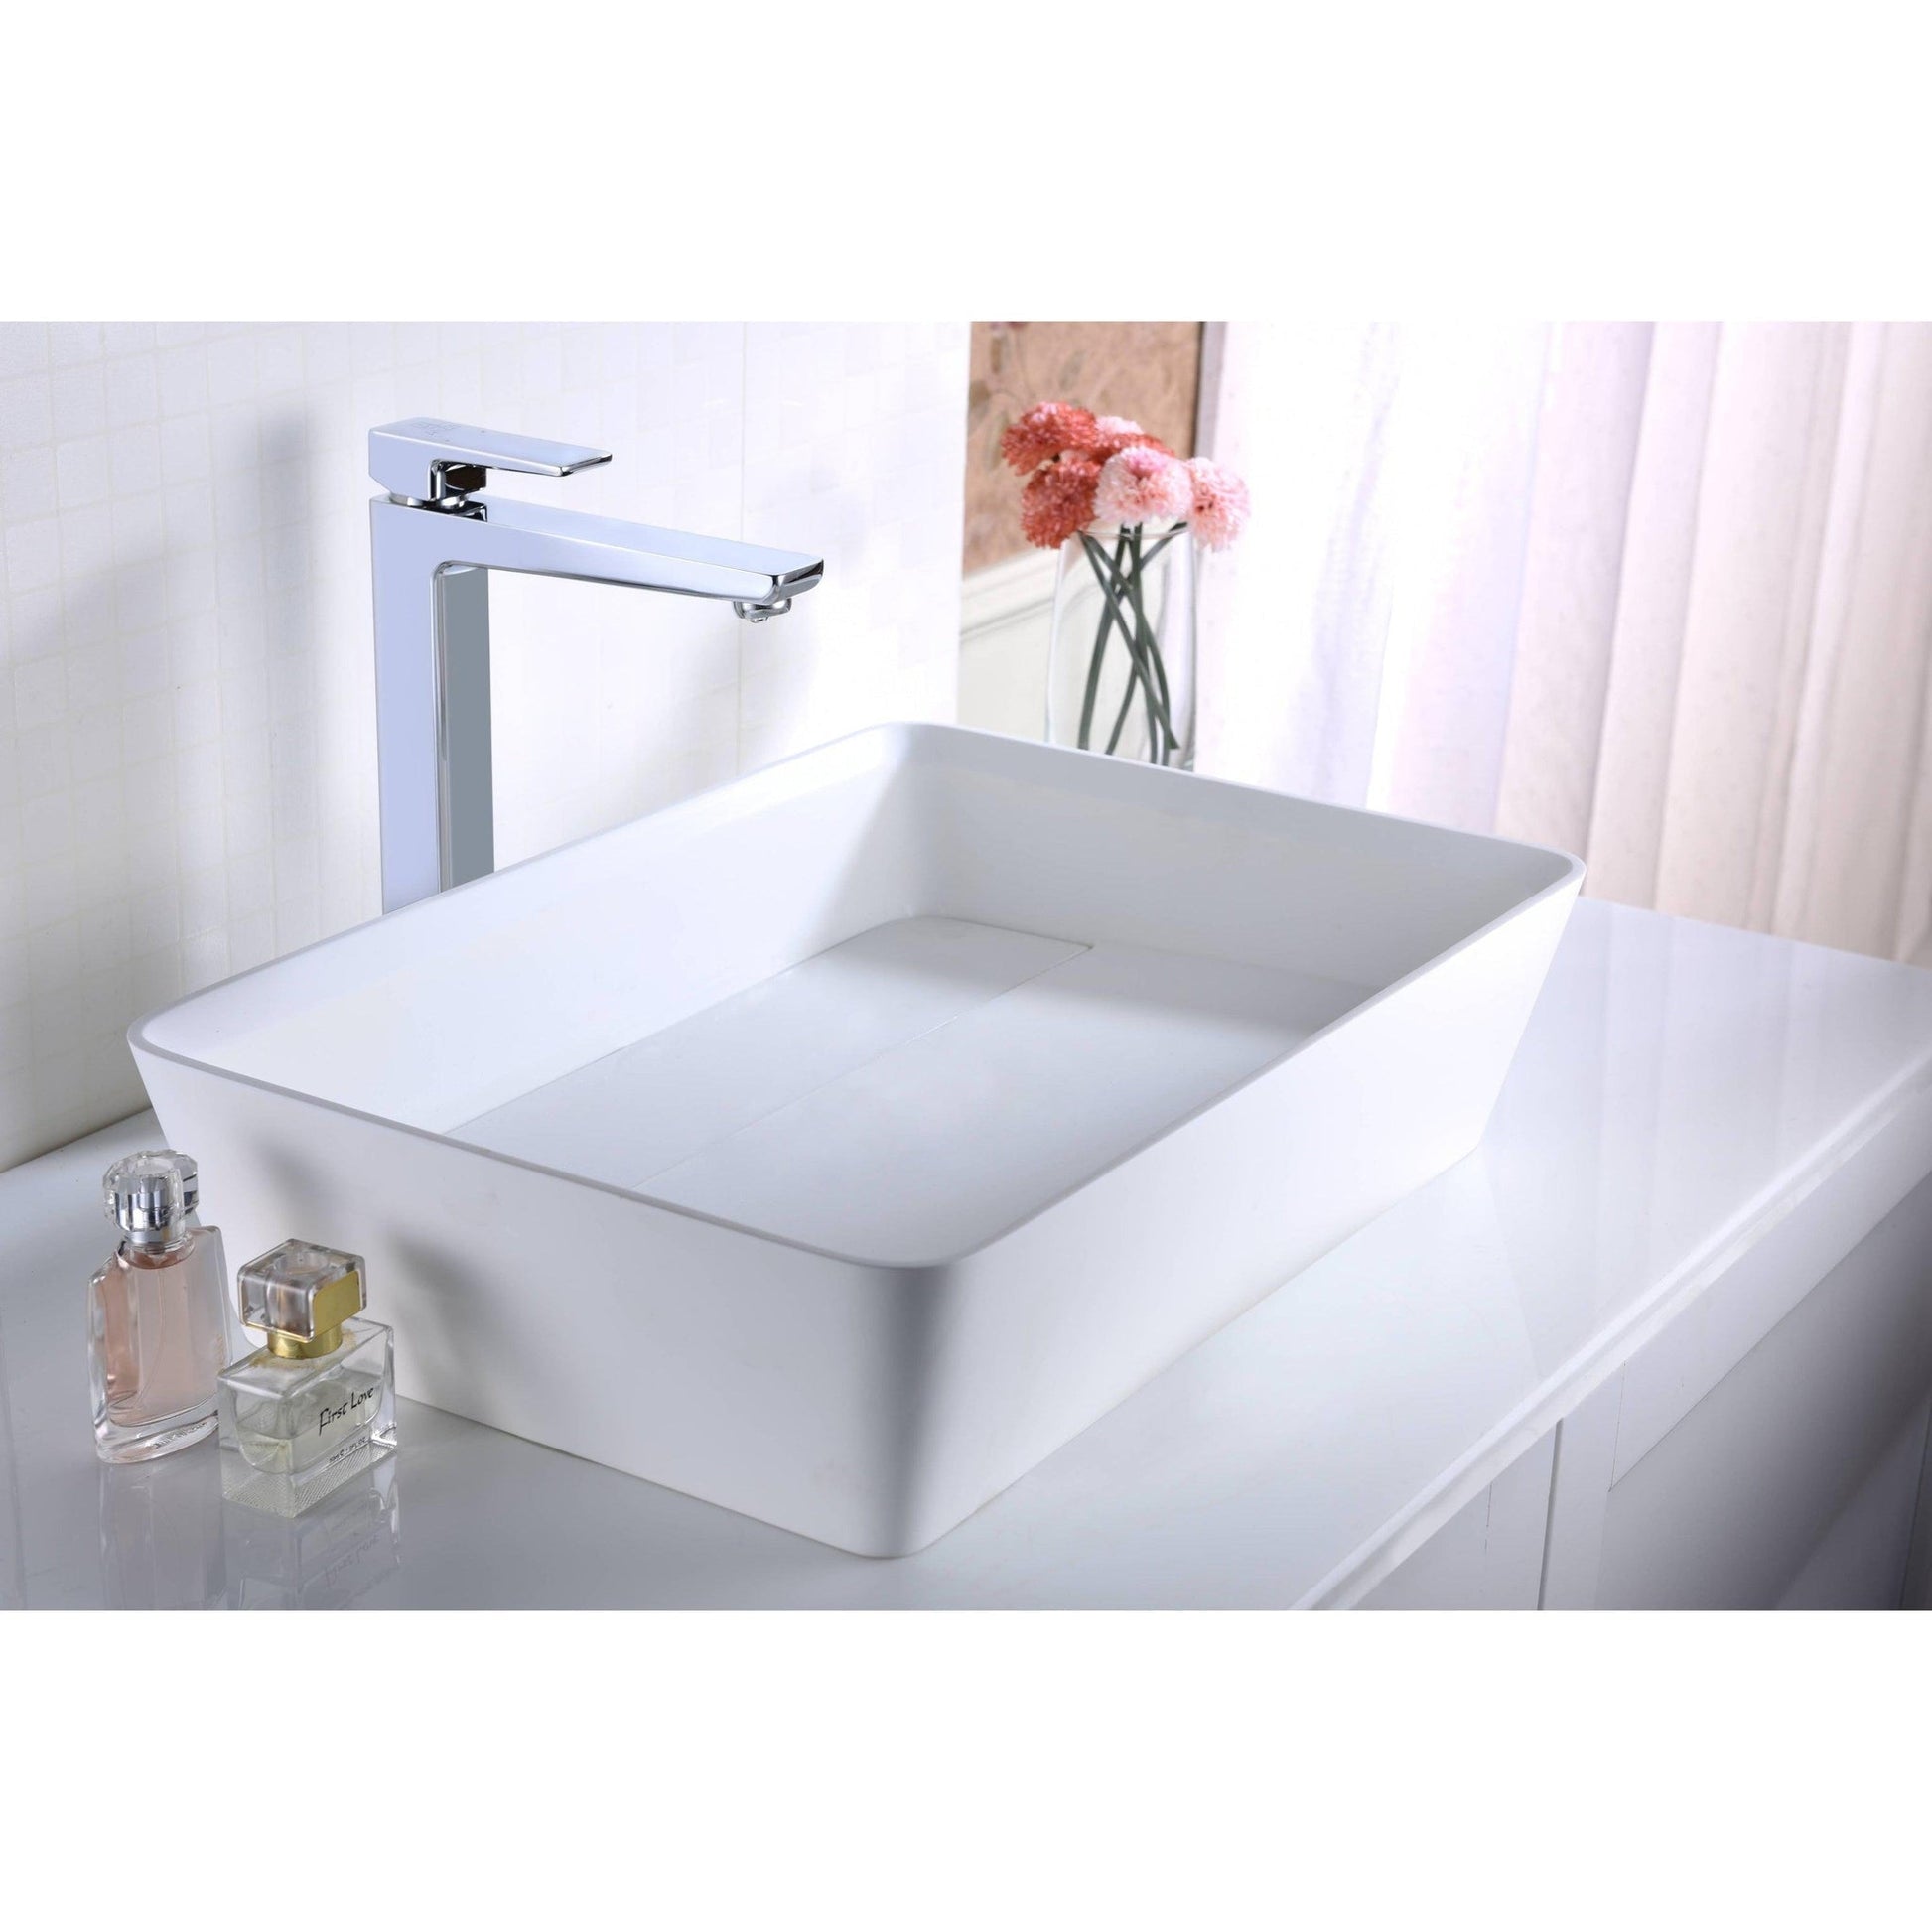 ANZZI Valor Series 9" Single Hole Polished Chrome Bathroom Sink Faucet